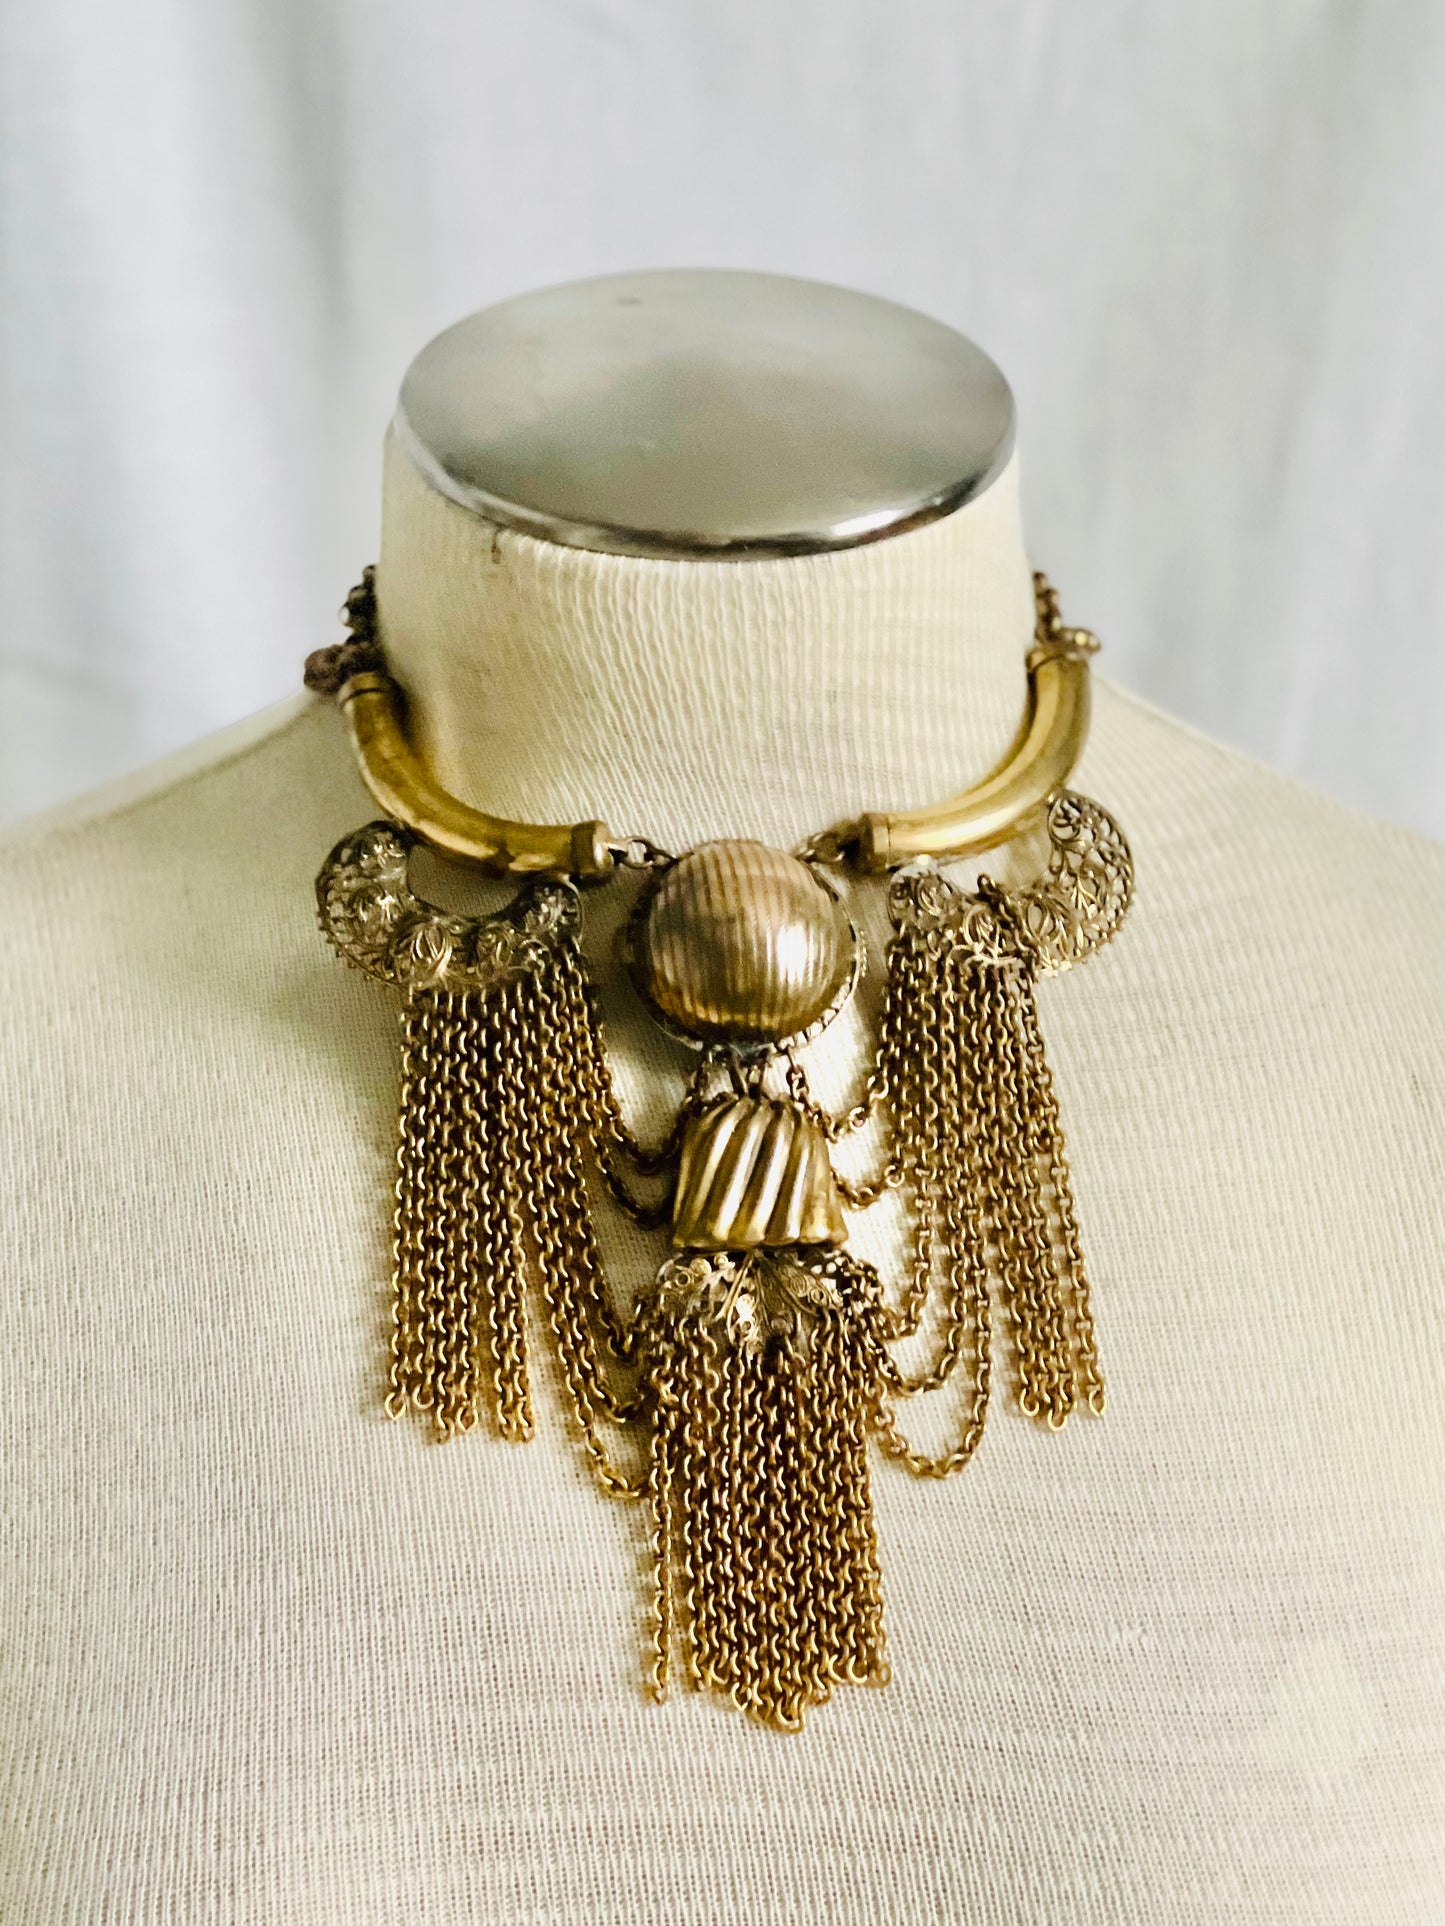 Vintage French 1930s Festoon Filigree Bib Necklace